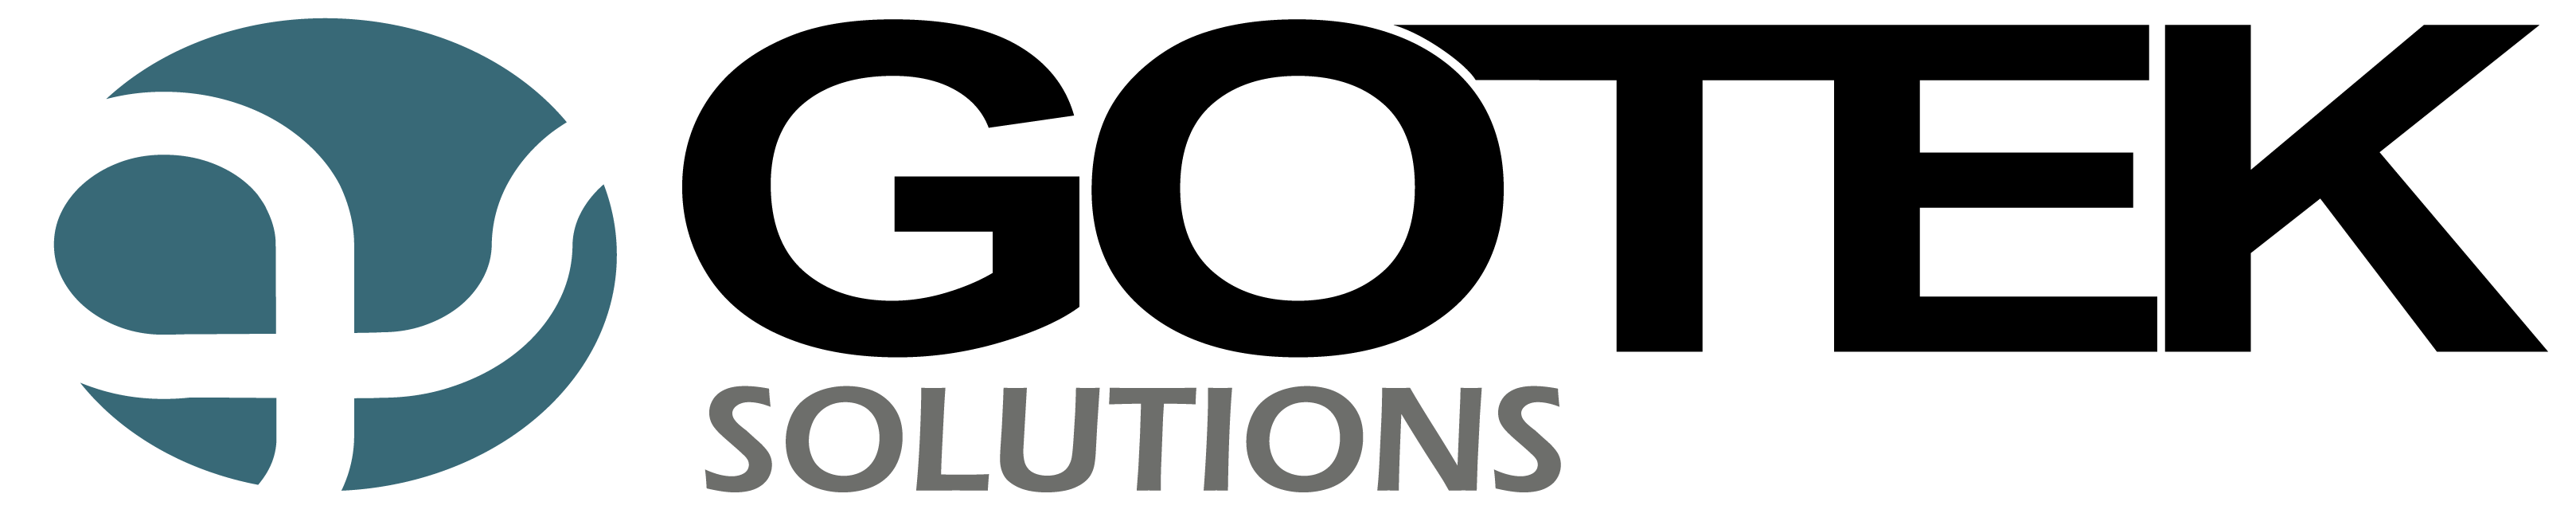 Gotek Solutions